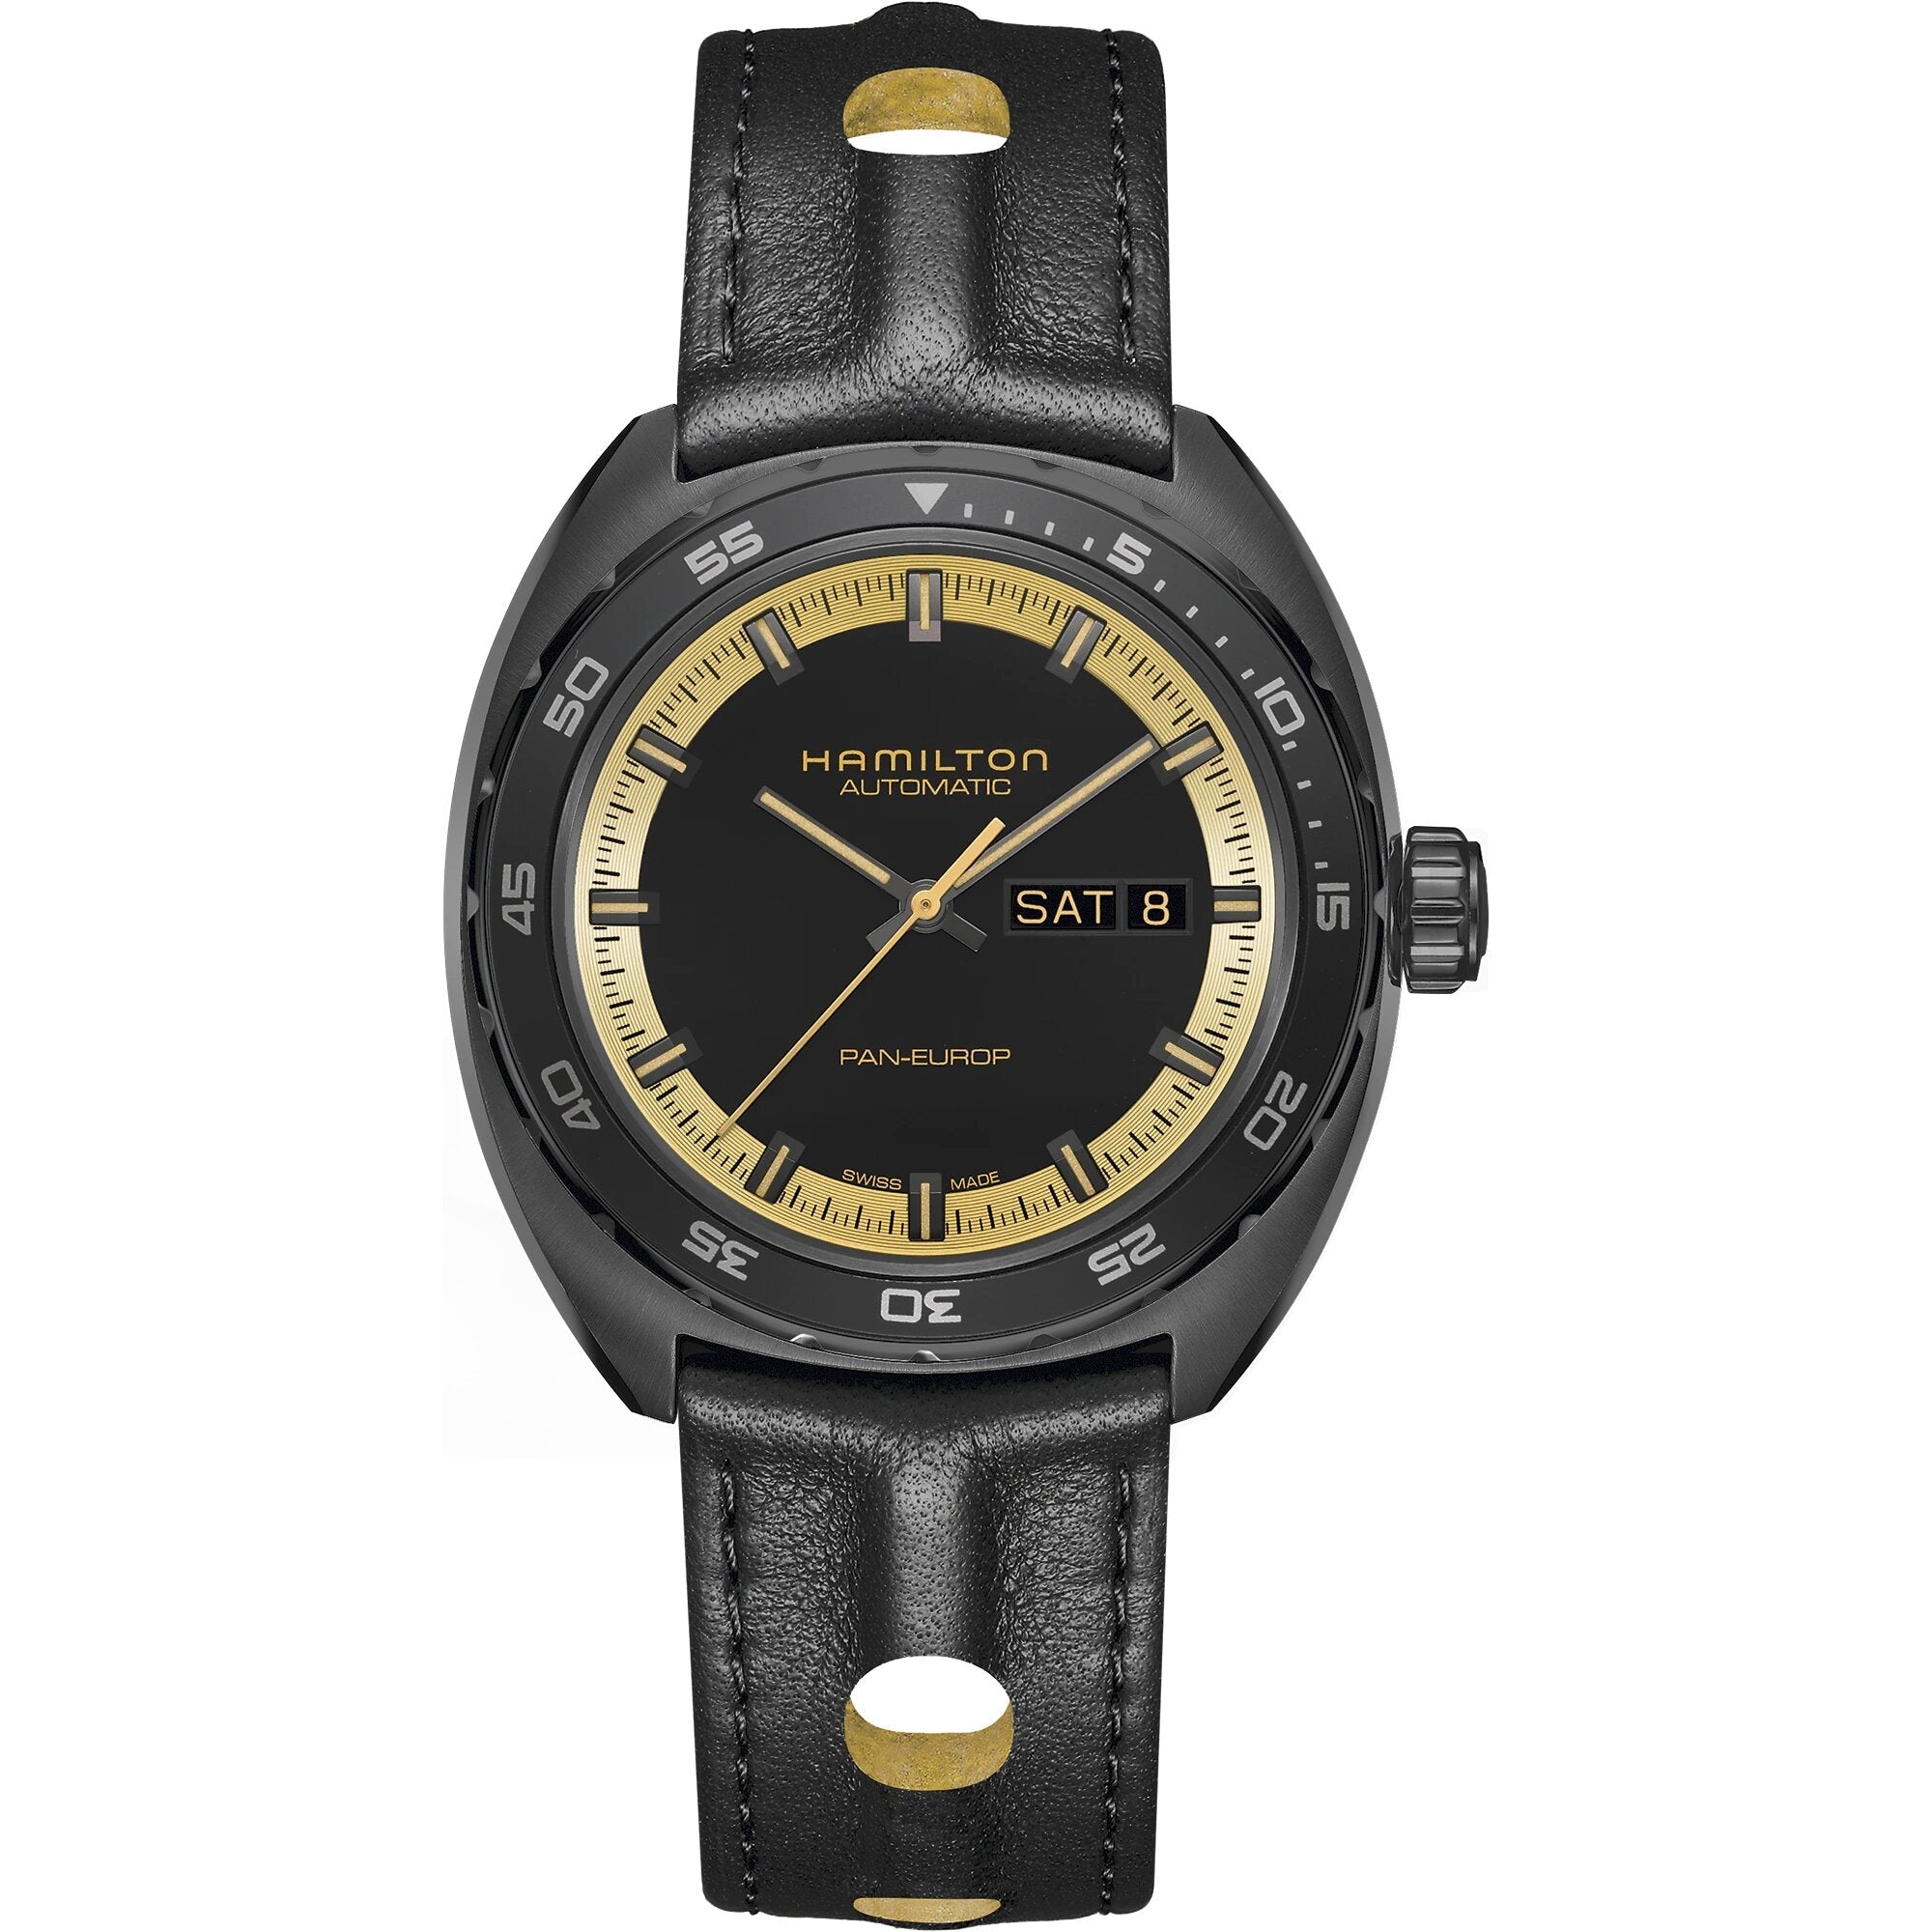 Hamilton American Classic Pan Europ Day Date Automatic Men's Watch H35425730